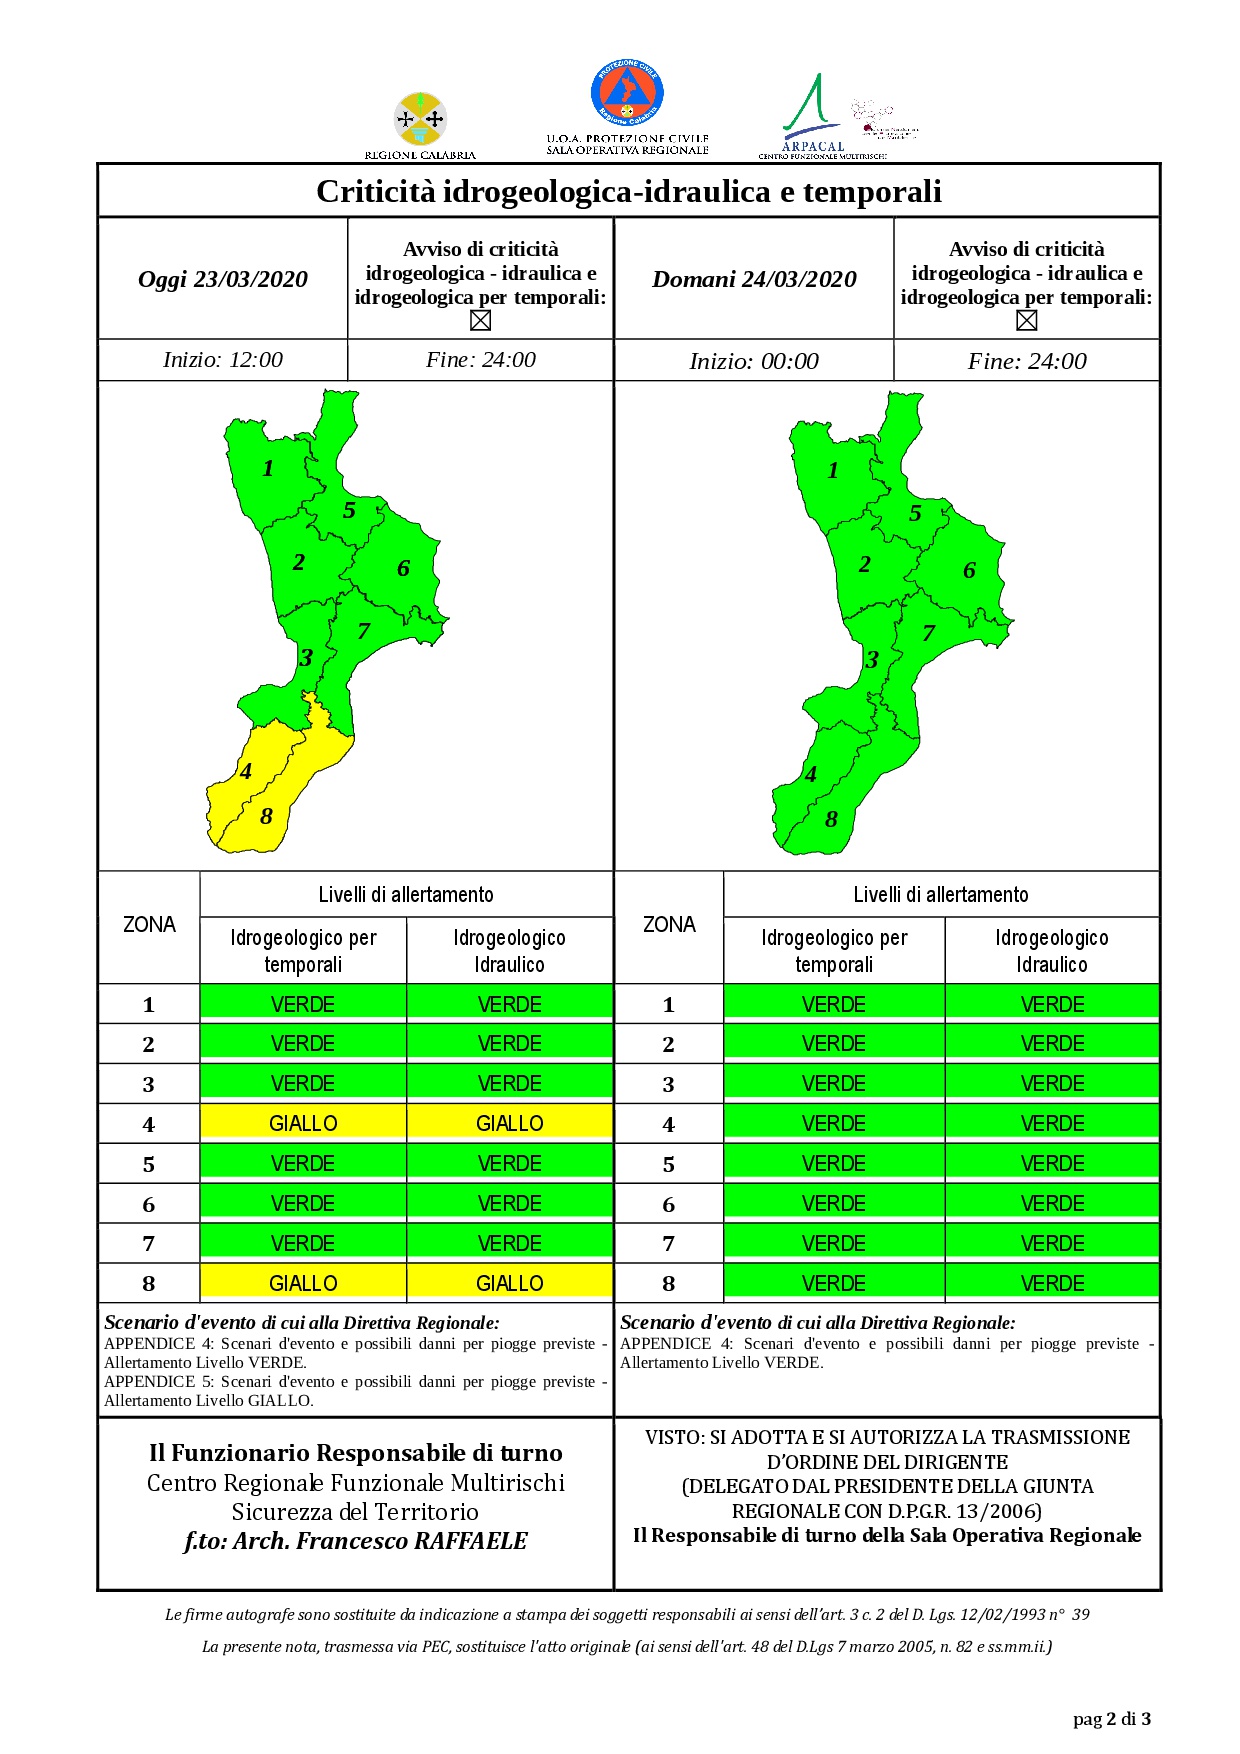 Criticità idrogeologica-idraulica e temporali in Calabria 23-03-2020